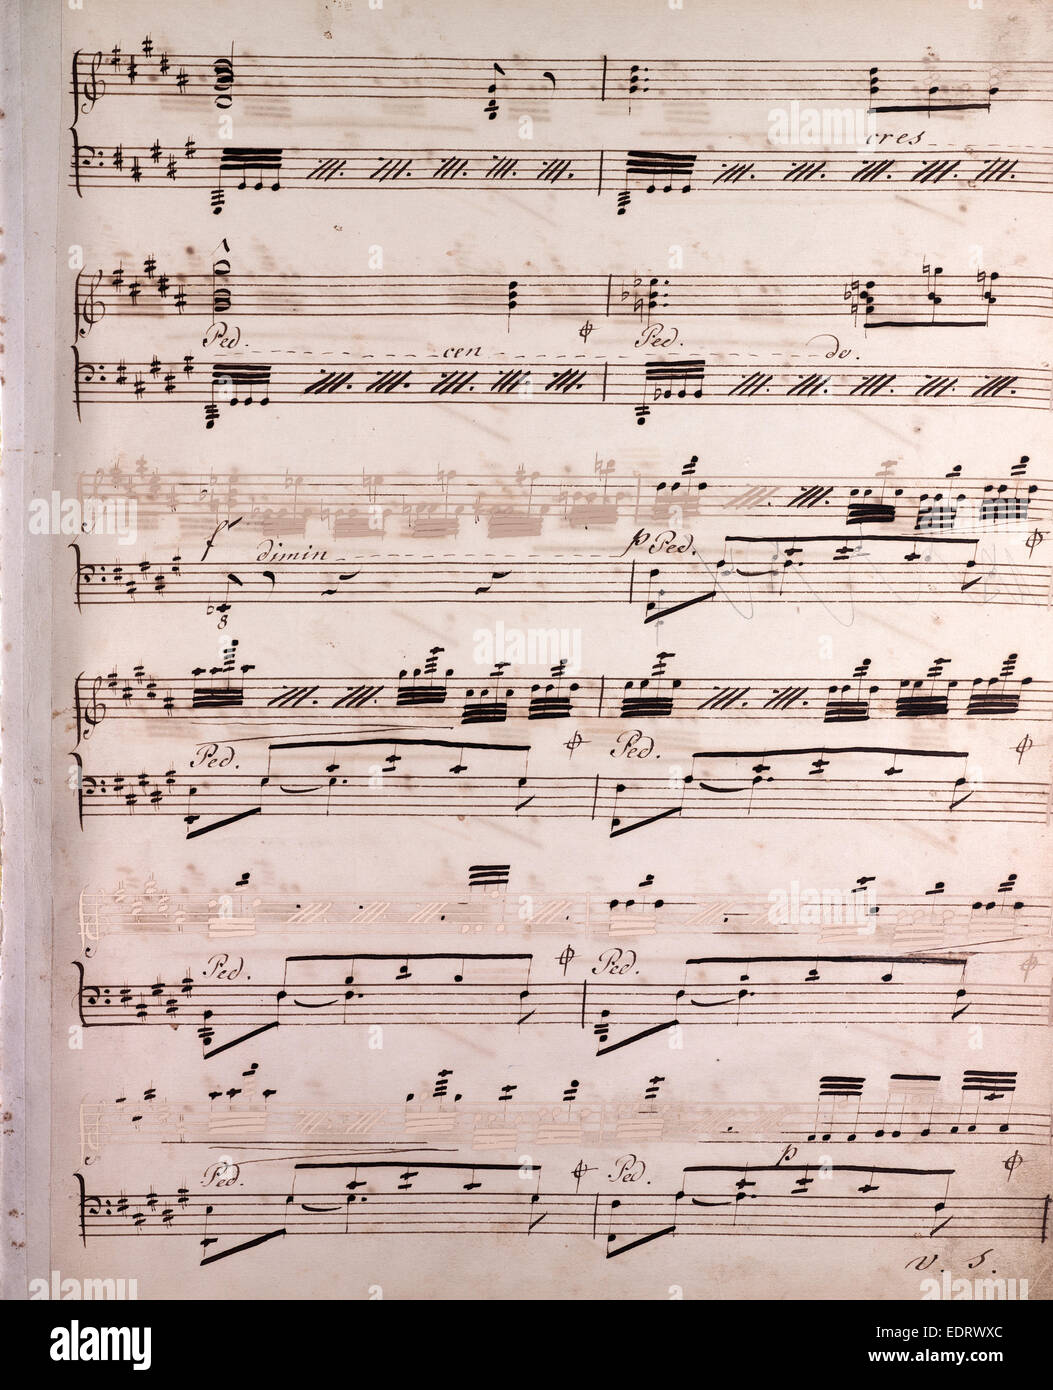 Partituras manuscritas, notas musicales, del siglo XIX. Foto de stock